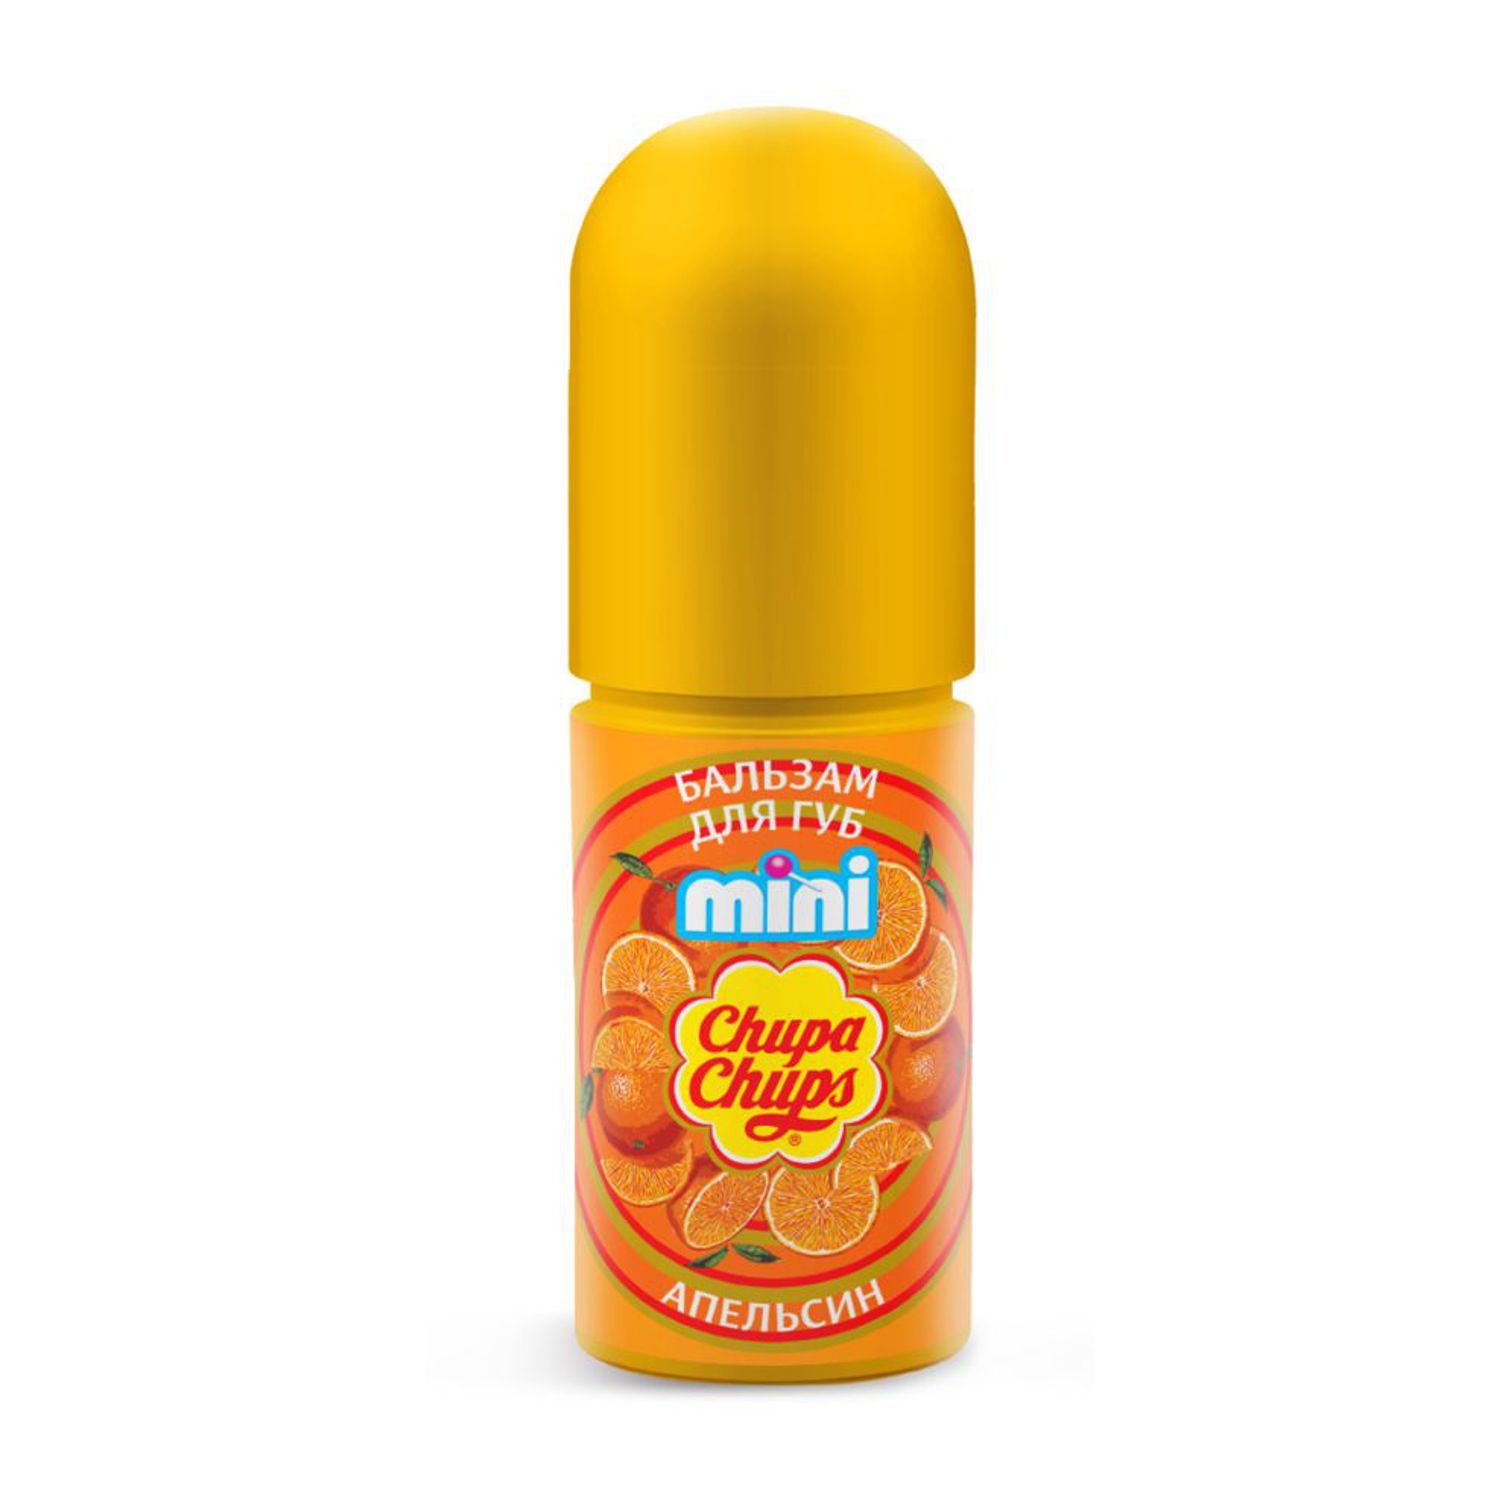 Бальзам для губ Chupa Chups mini (апельсин) signore adriano бальзам для бороды апельсин paradise orange